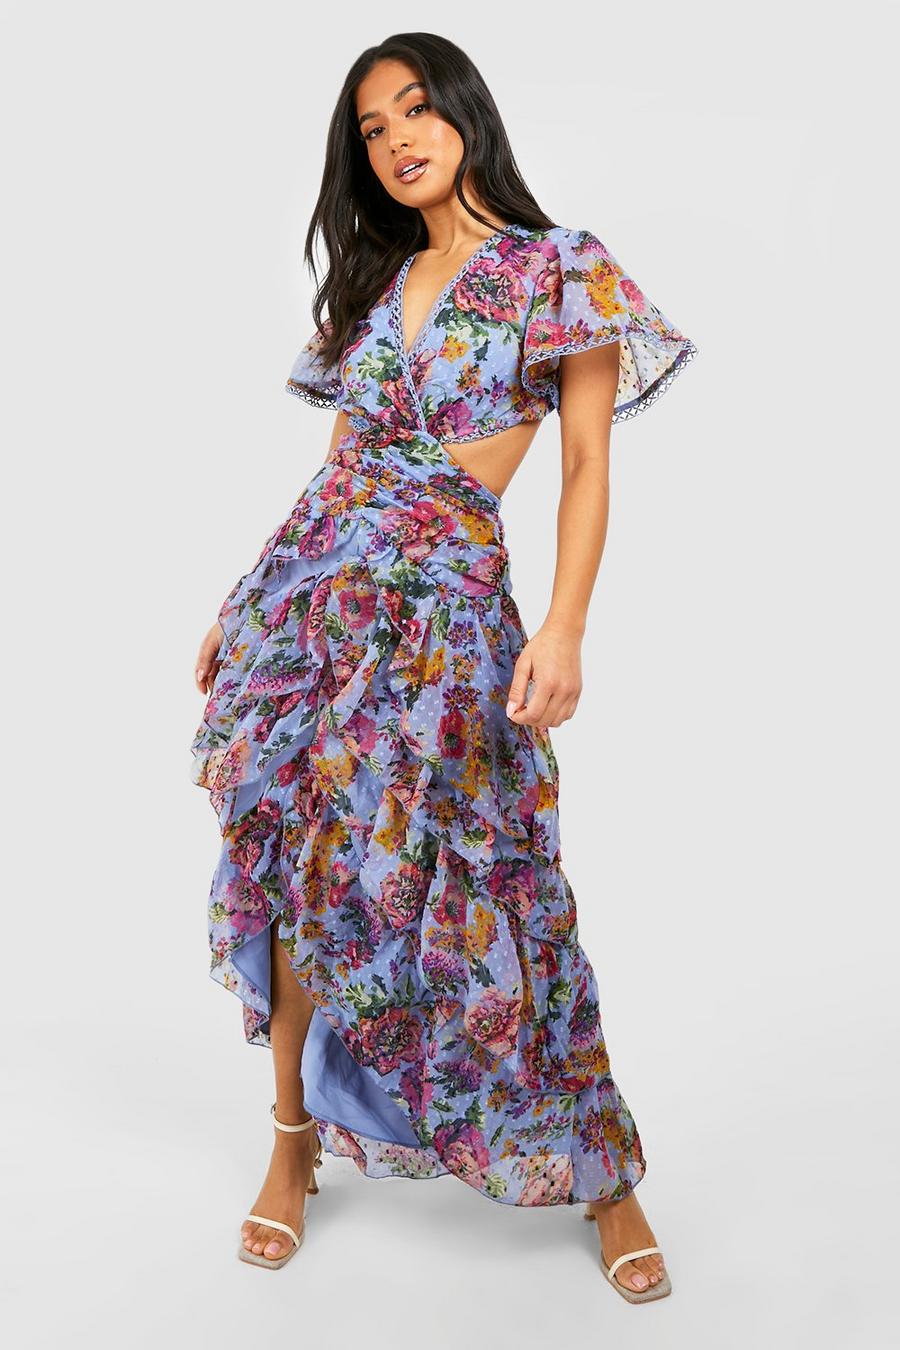 Woven Floral Cut Out Maxi Dress